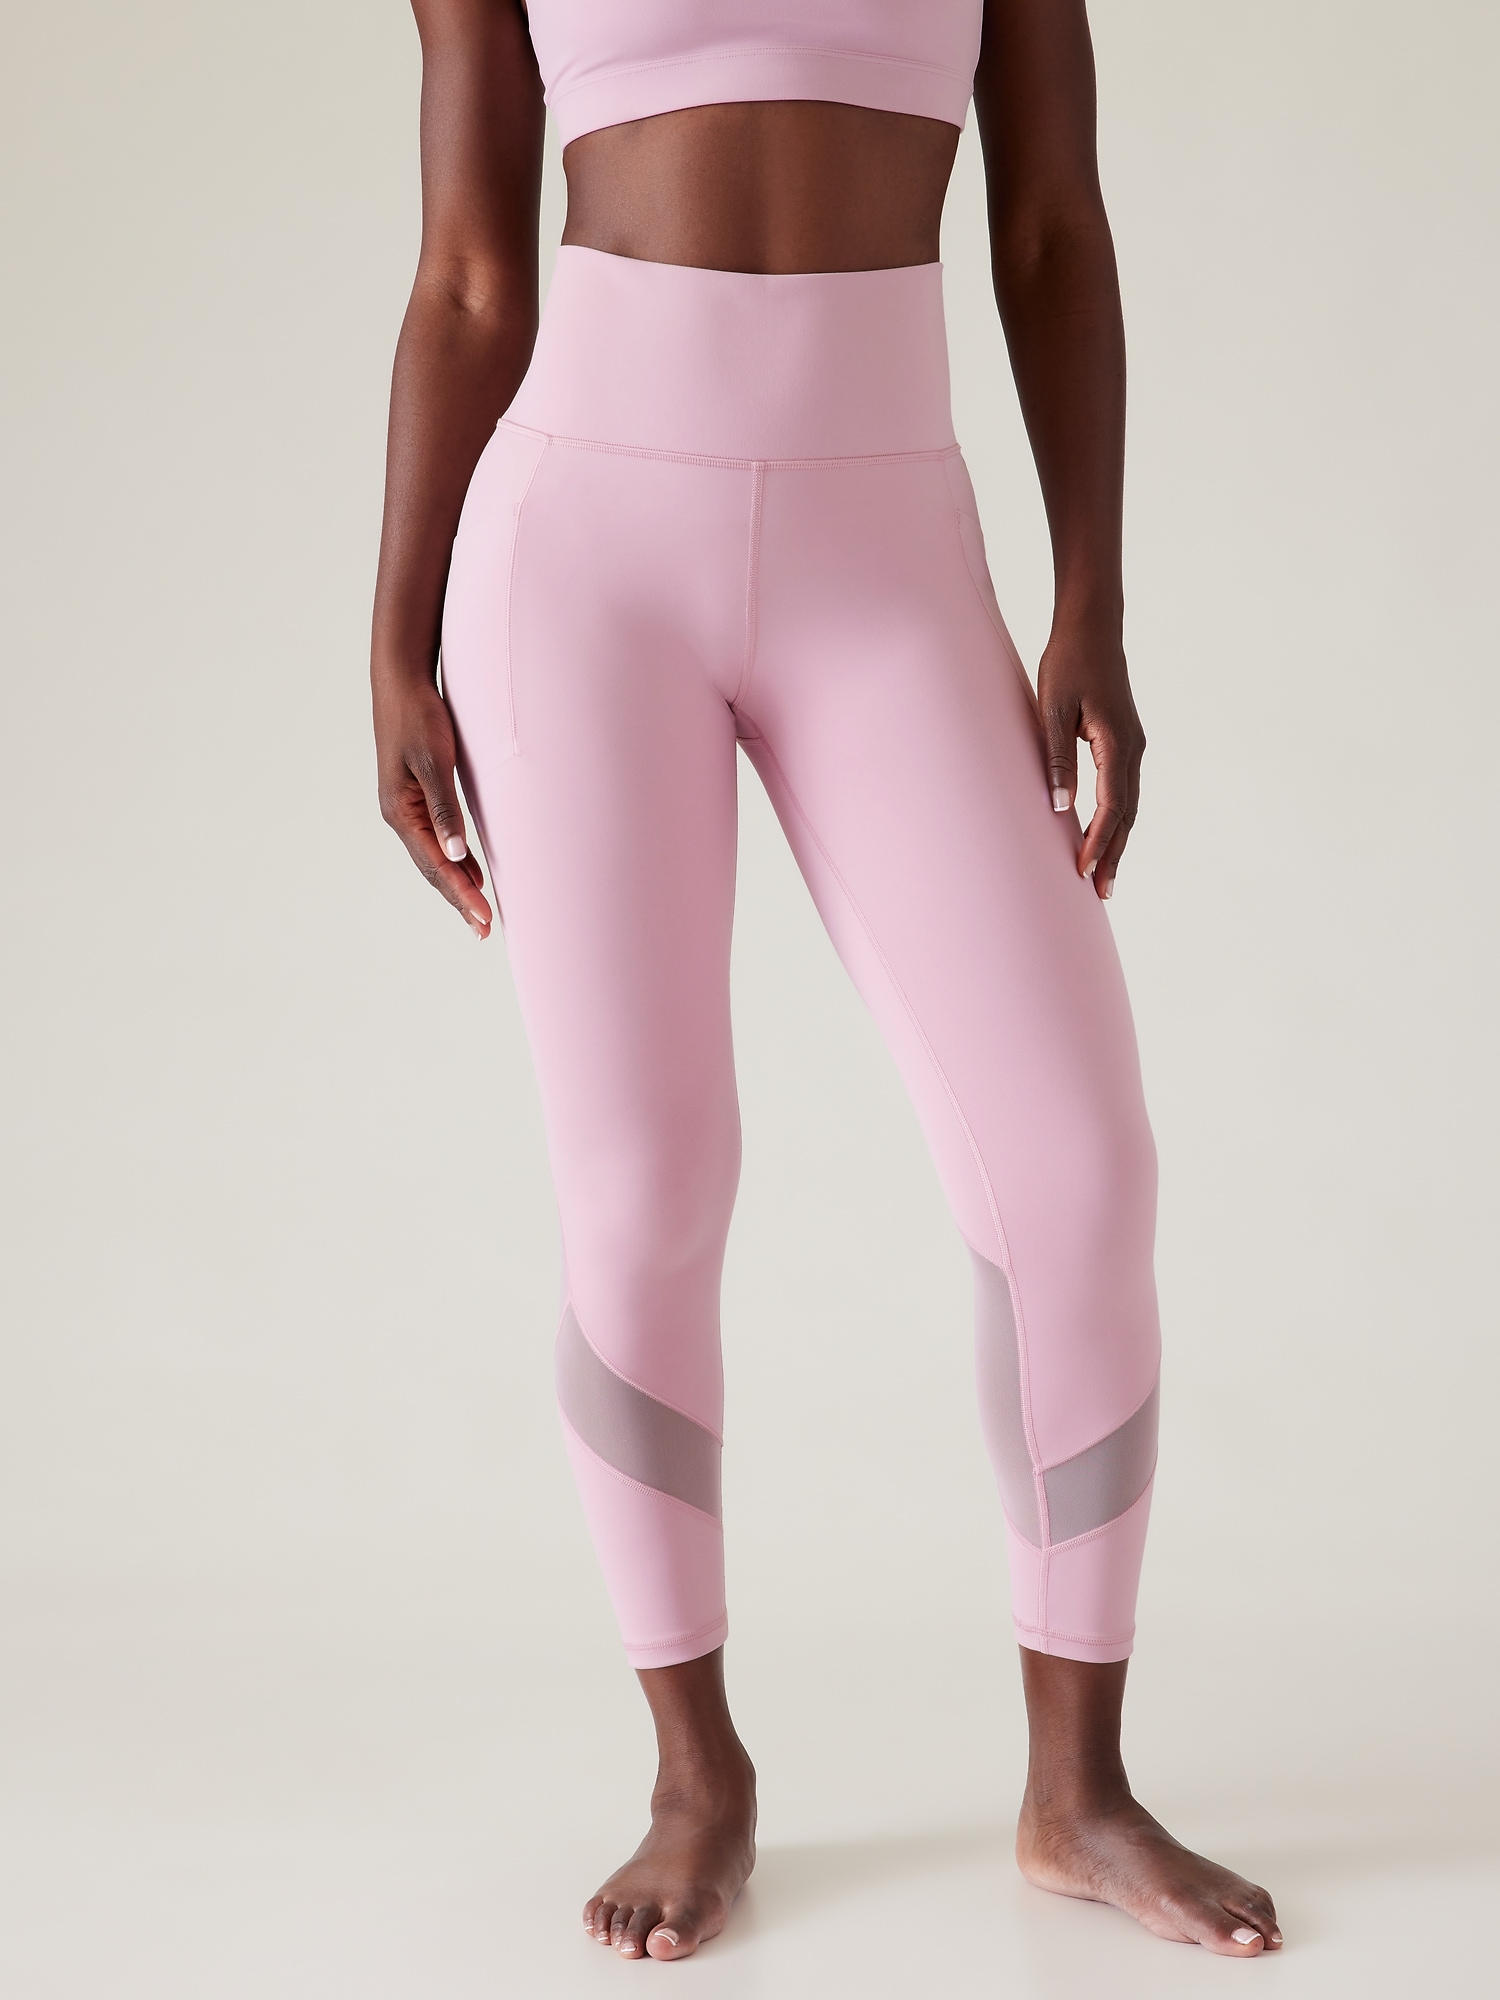 Cathalem Yoga Pants for Women Petite Length Exercise Yoga Waist Bubble  Running Yoga Pants for Women Tall Length Mesh Lift Pants Black Medium 